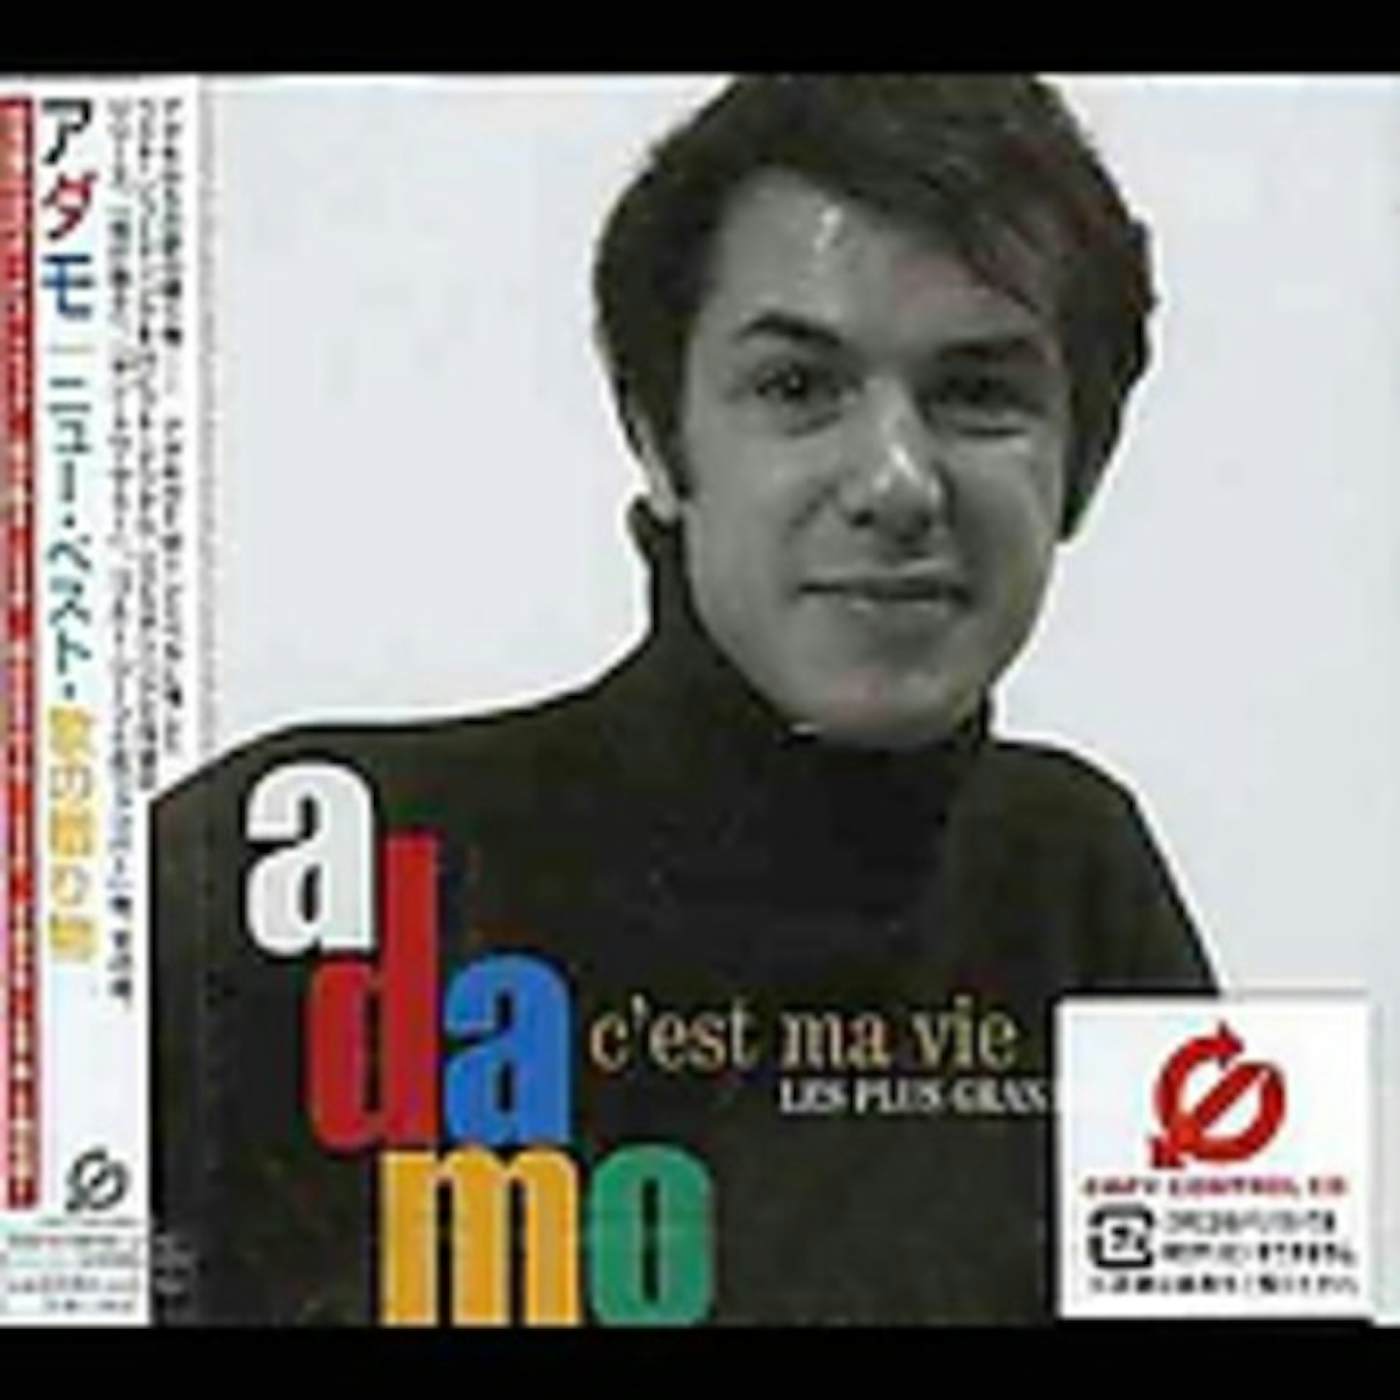 Adamo C'EST MA VIE CD